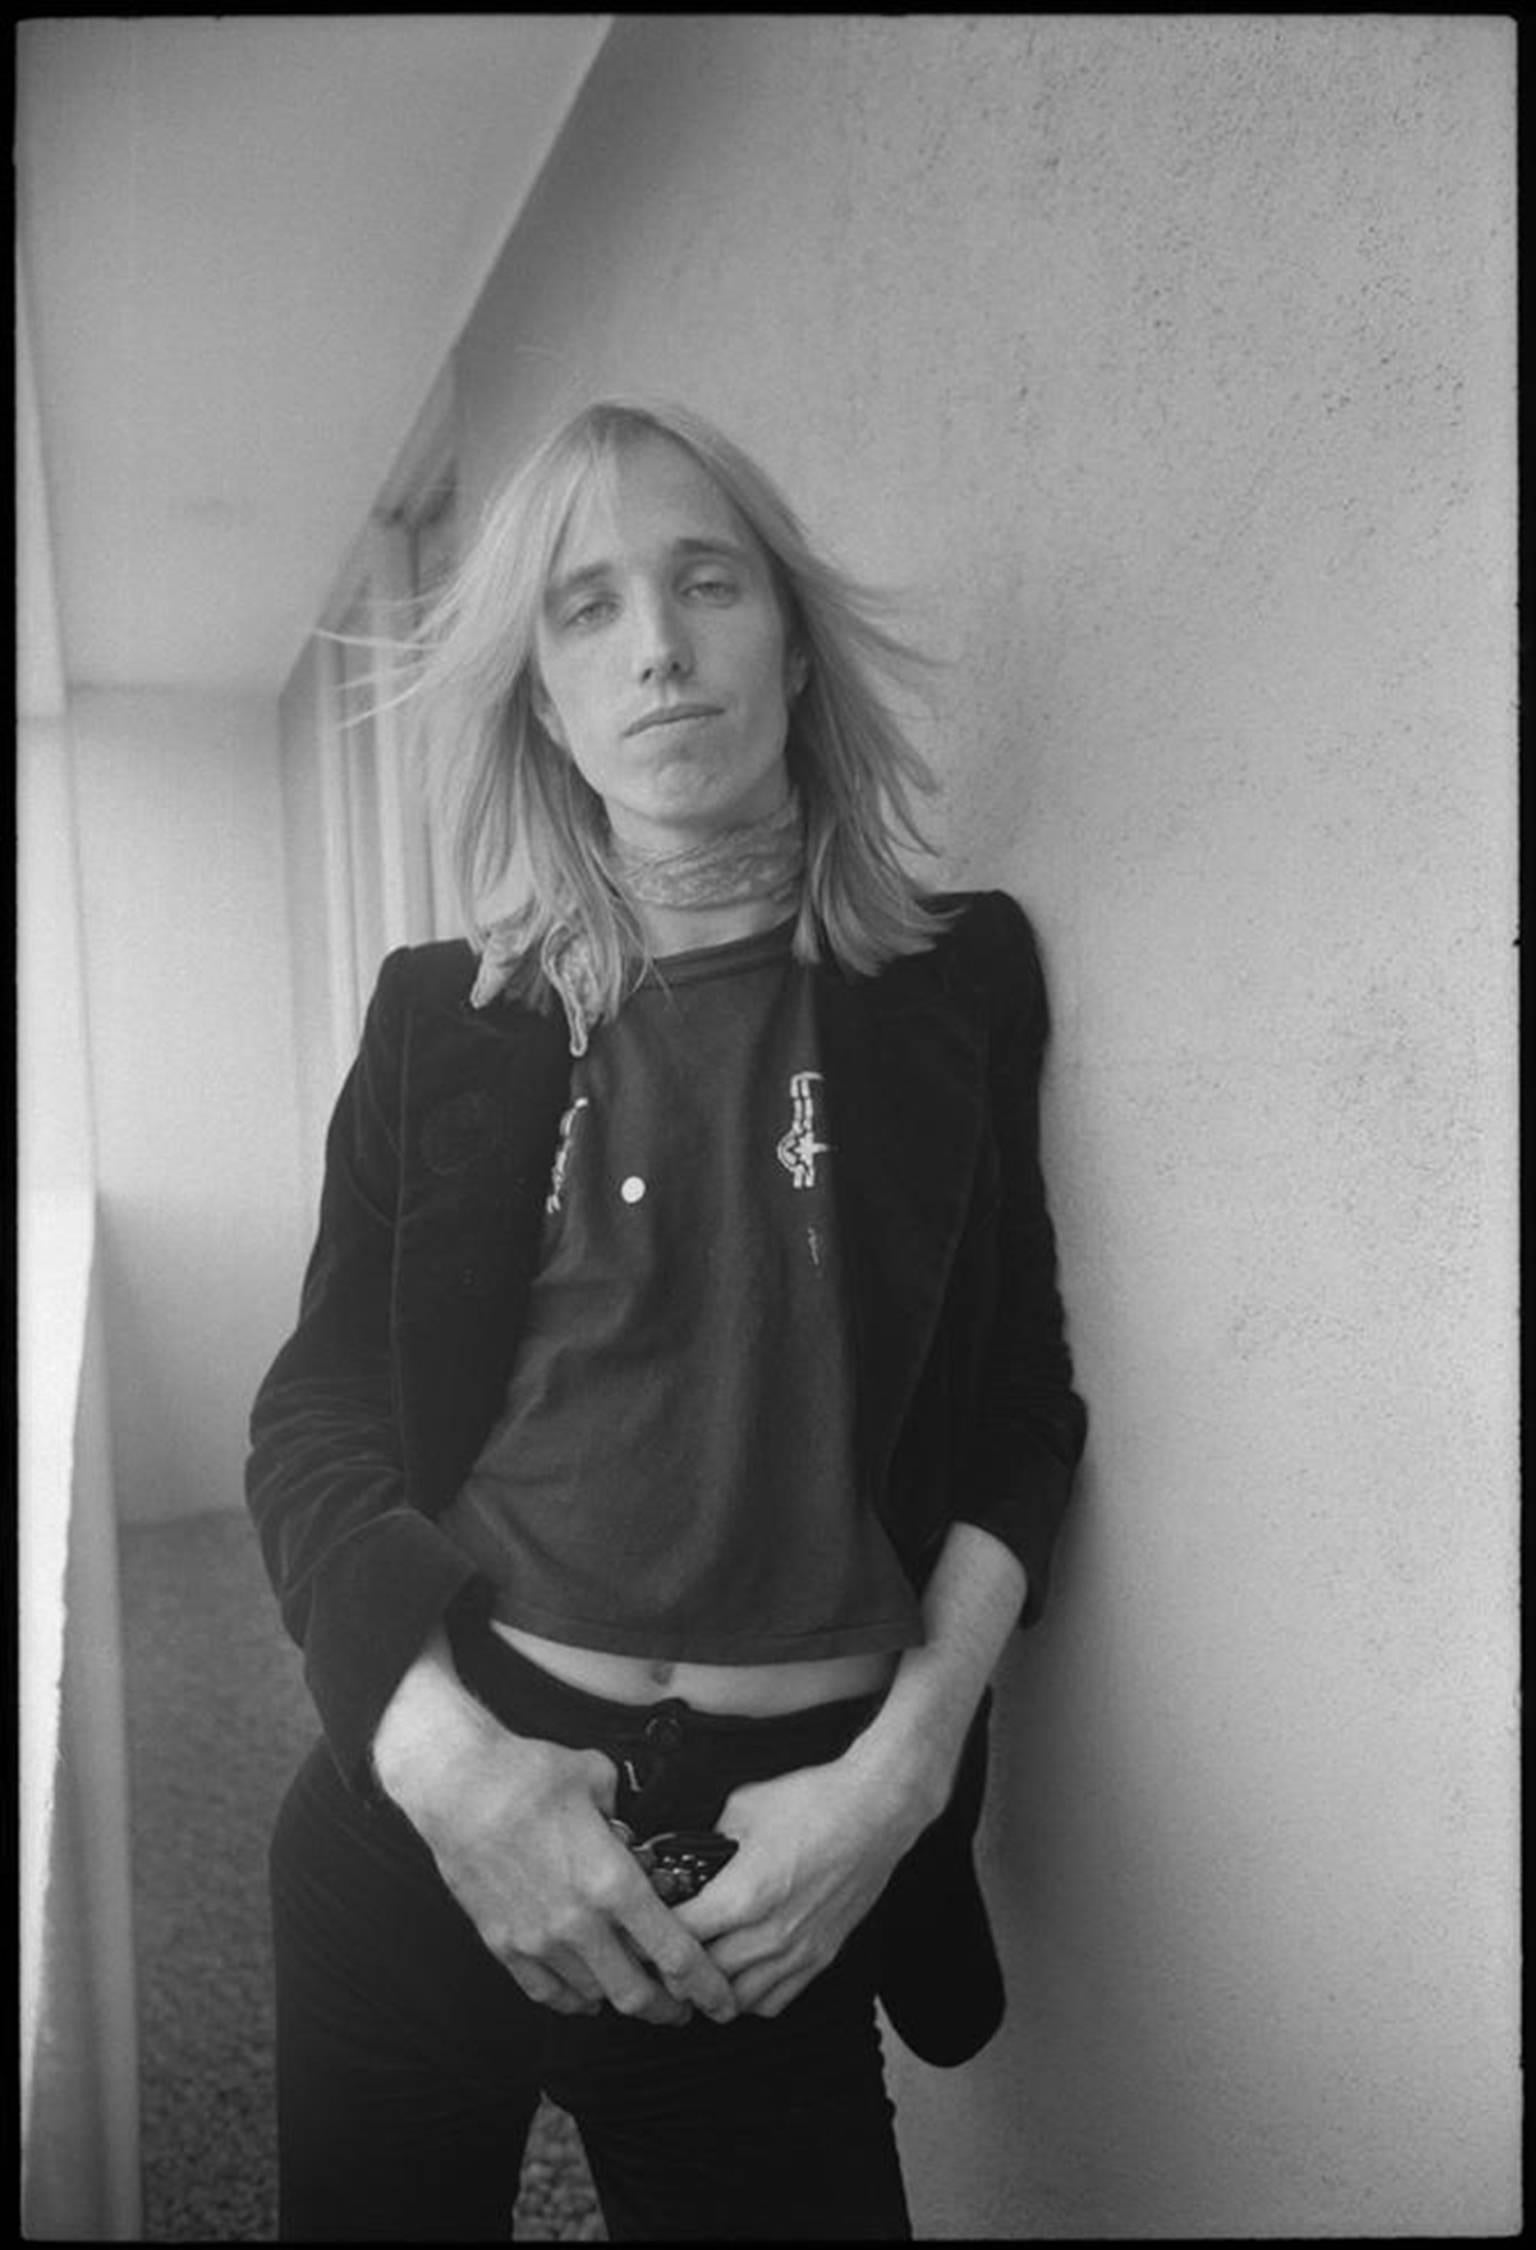 Michael Zagaris Black and White Photograph - Tom Petty